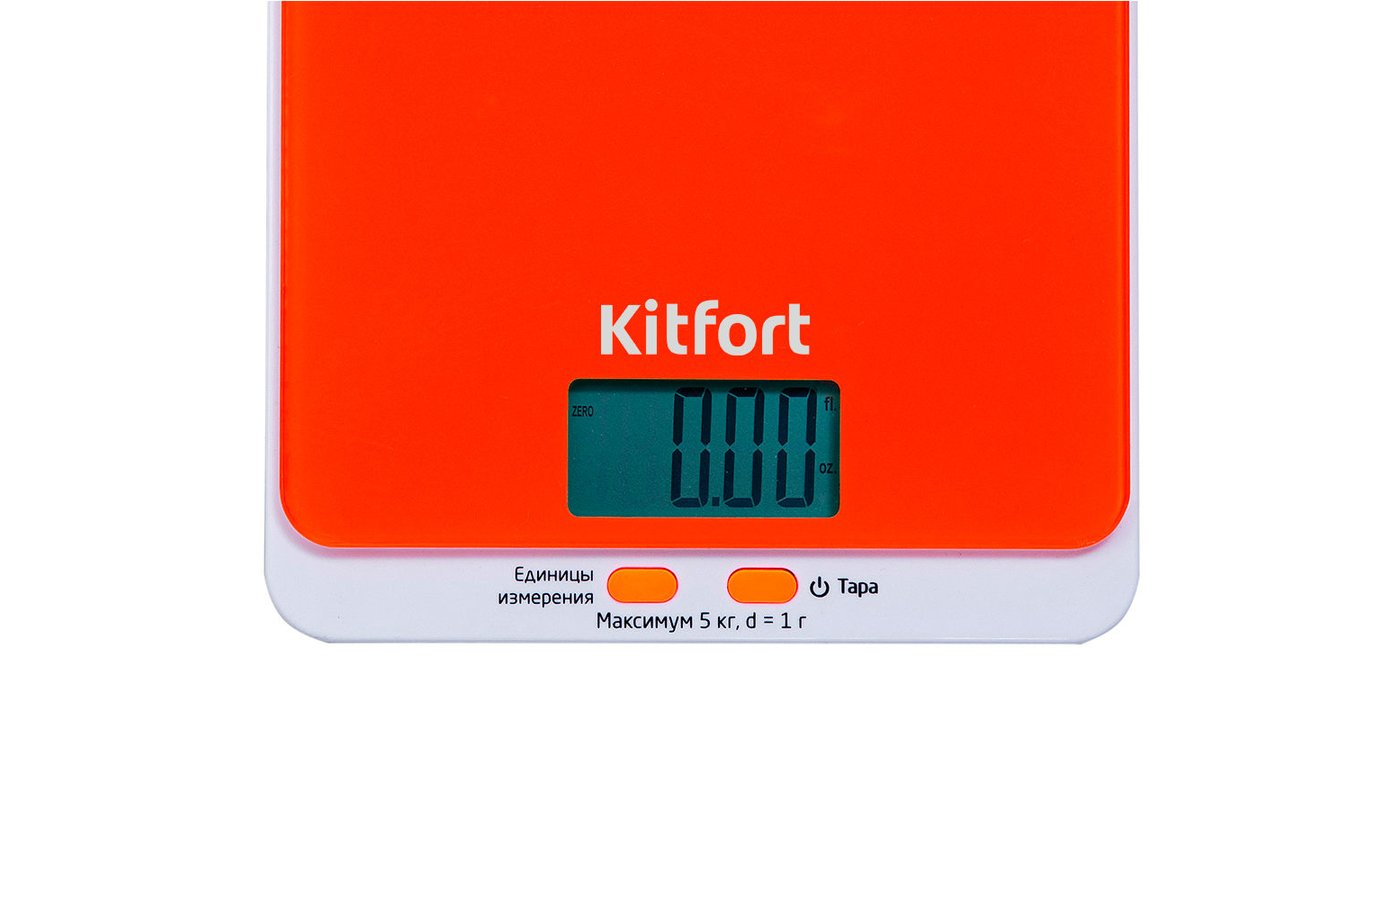 Кухонные весы kitfort 803. Кухонные весы Kitfort кт-803-6. Весы Kitfort KT-803. Кухонные весы Kitfort KT-803. Весы кухонные Kitfort KT-803-2 (розовые).